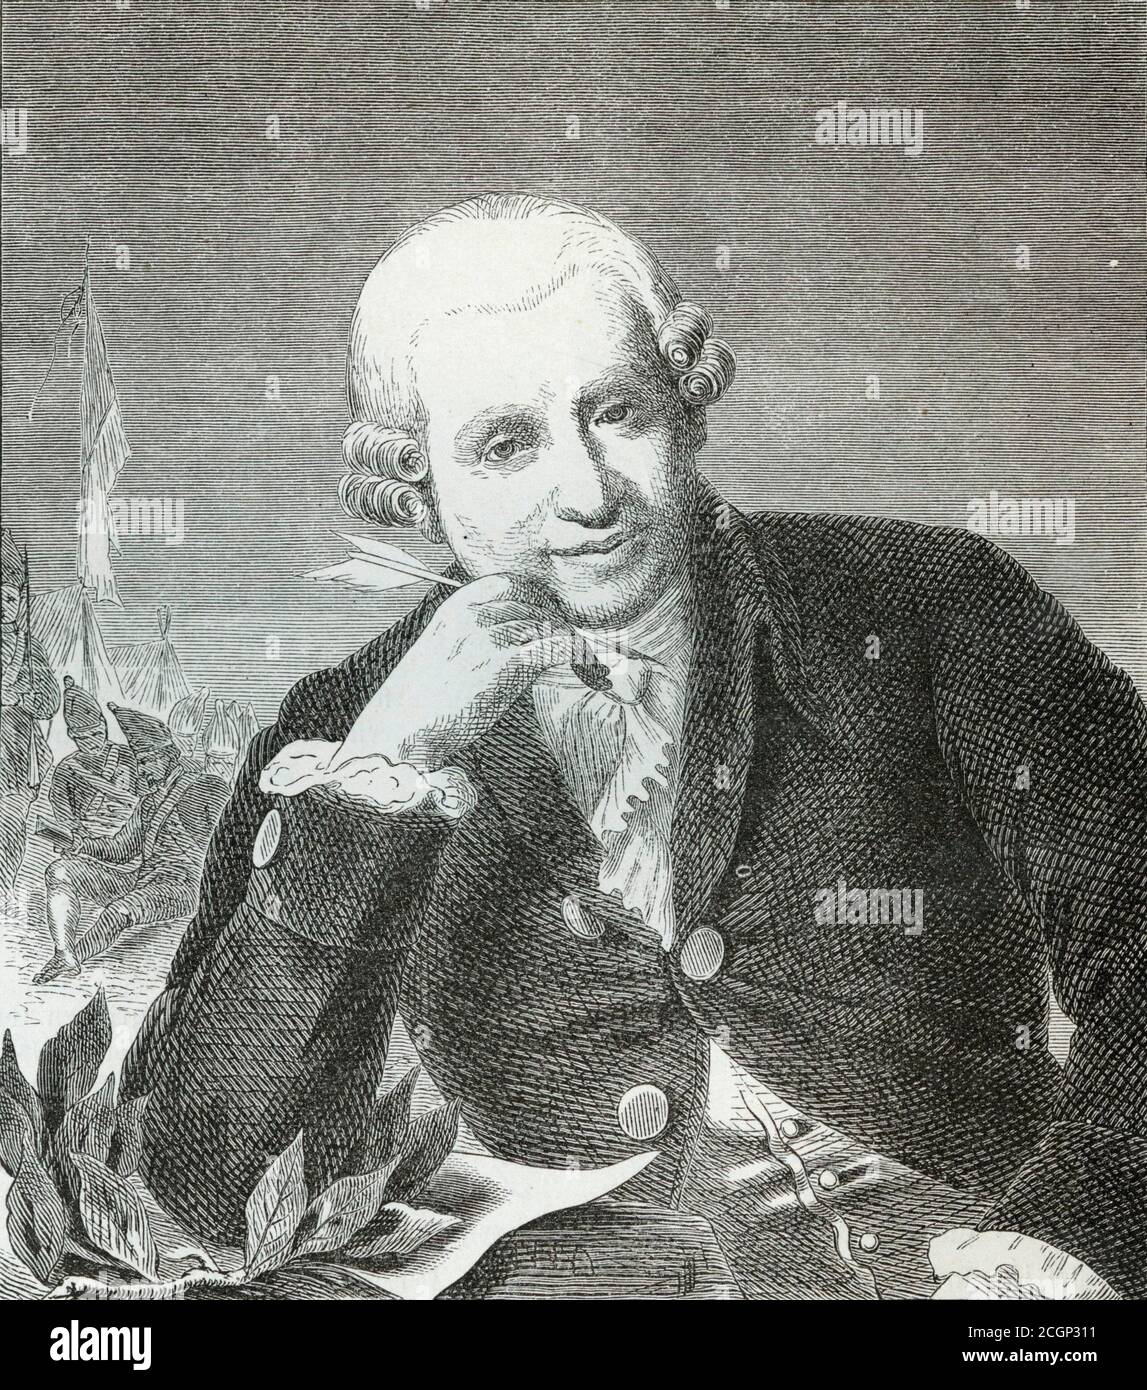 Johann Wilhelm Ludwig Gleim, Historical Illustration from Otto von Leixner: Illustrated History of German Literature, Leipzig and Berlin 1880, Germany Stock Photo